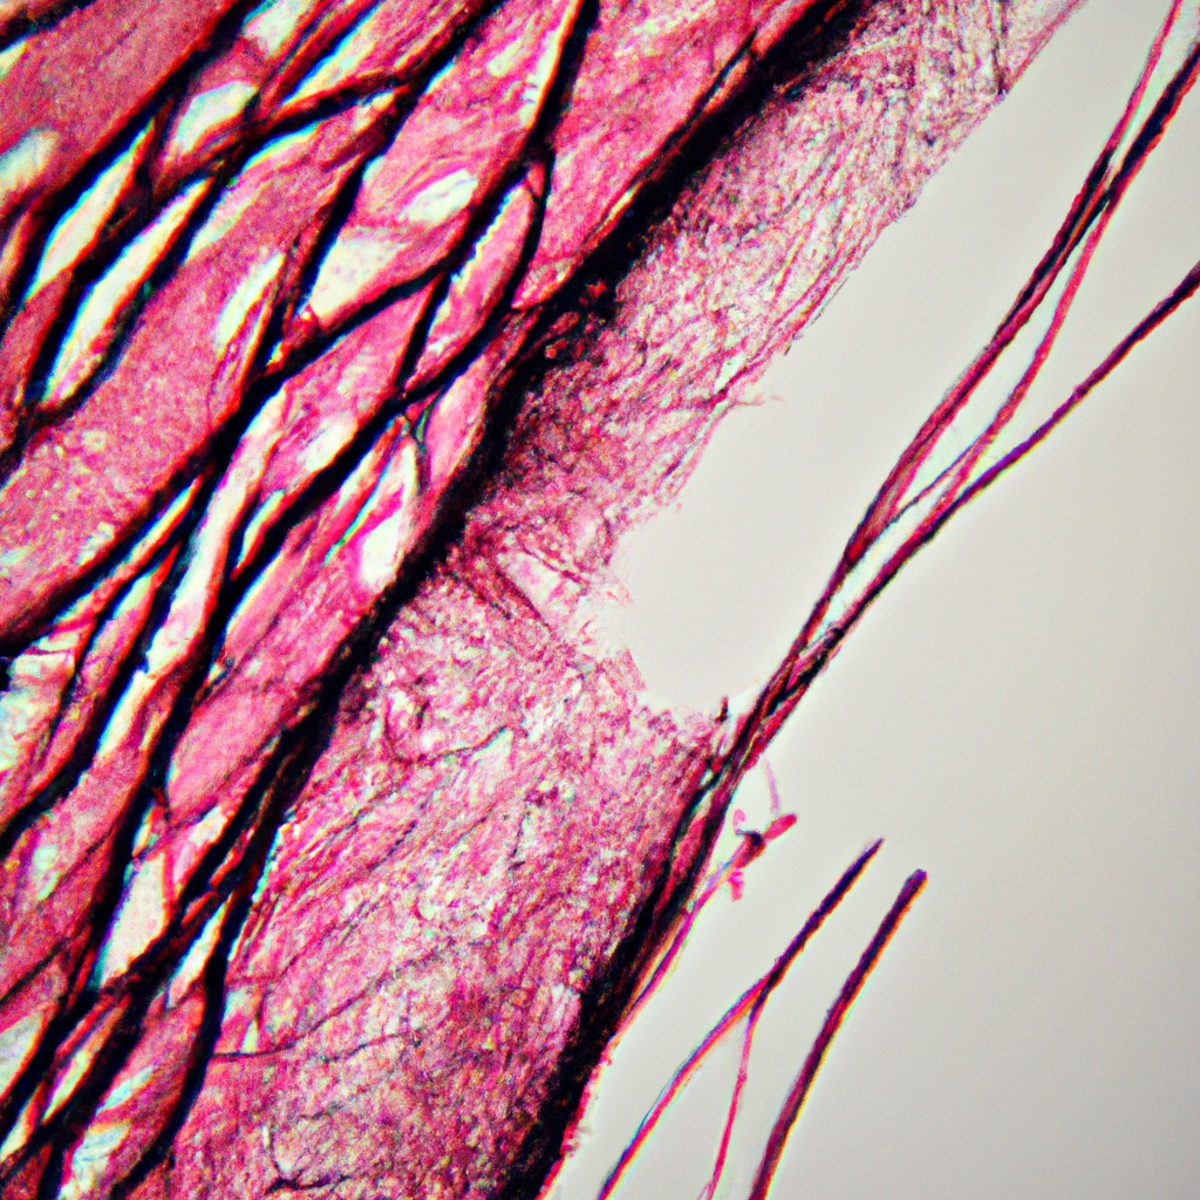 Vibrant collagen fibers form mesmerizing artwork on microscope slide, inviting curiosity into collagenous gastritis.